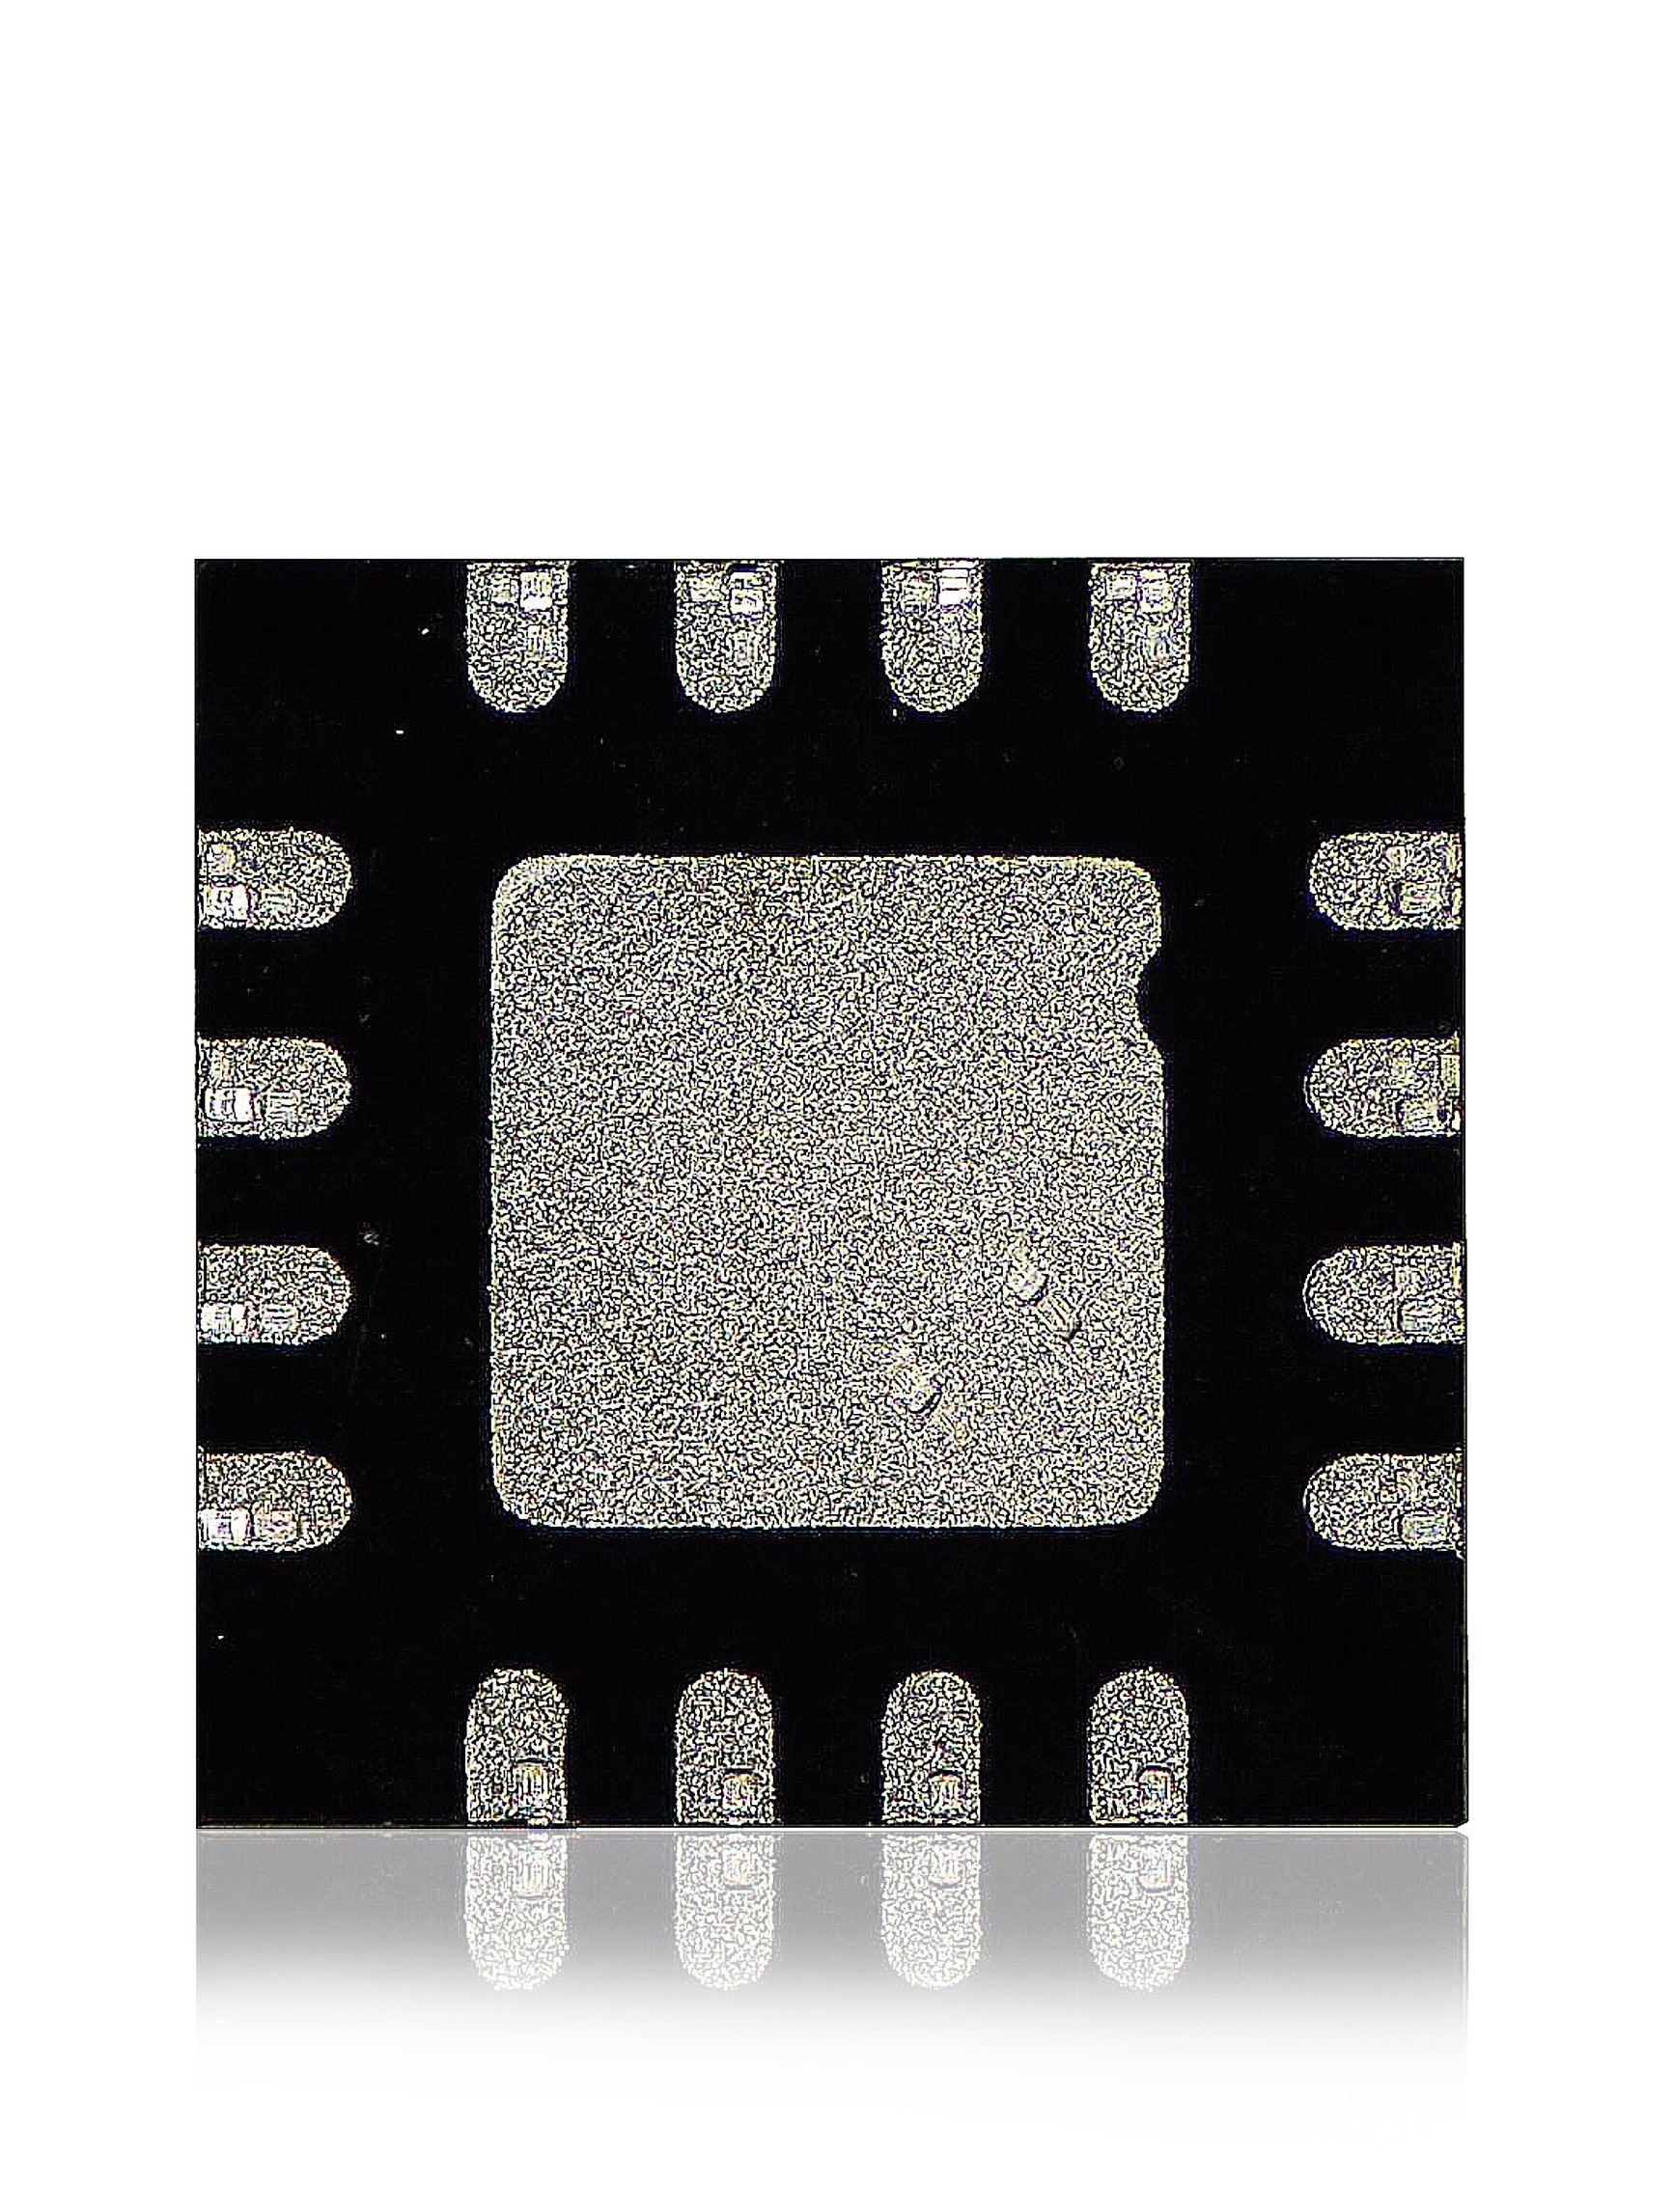 Apple MacBook High-side Current Sensinsory Temperature Measurement Controller IC Compatible - (SMSC1704-2 / EMC1704-2 / EMC1704 / 1704-2:QFN-16 PIN)